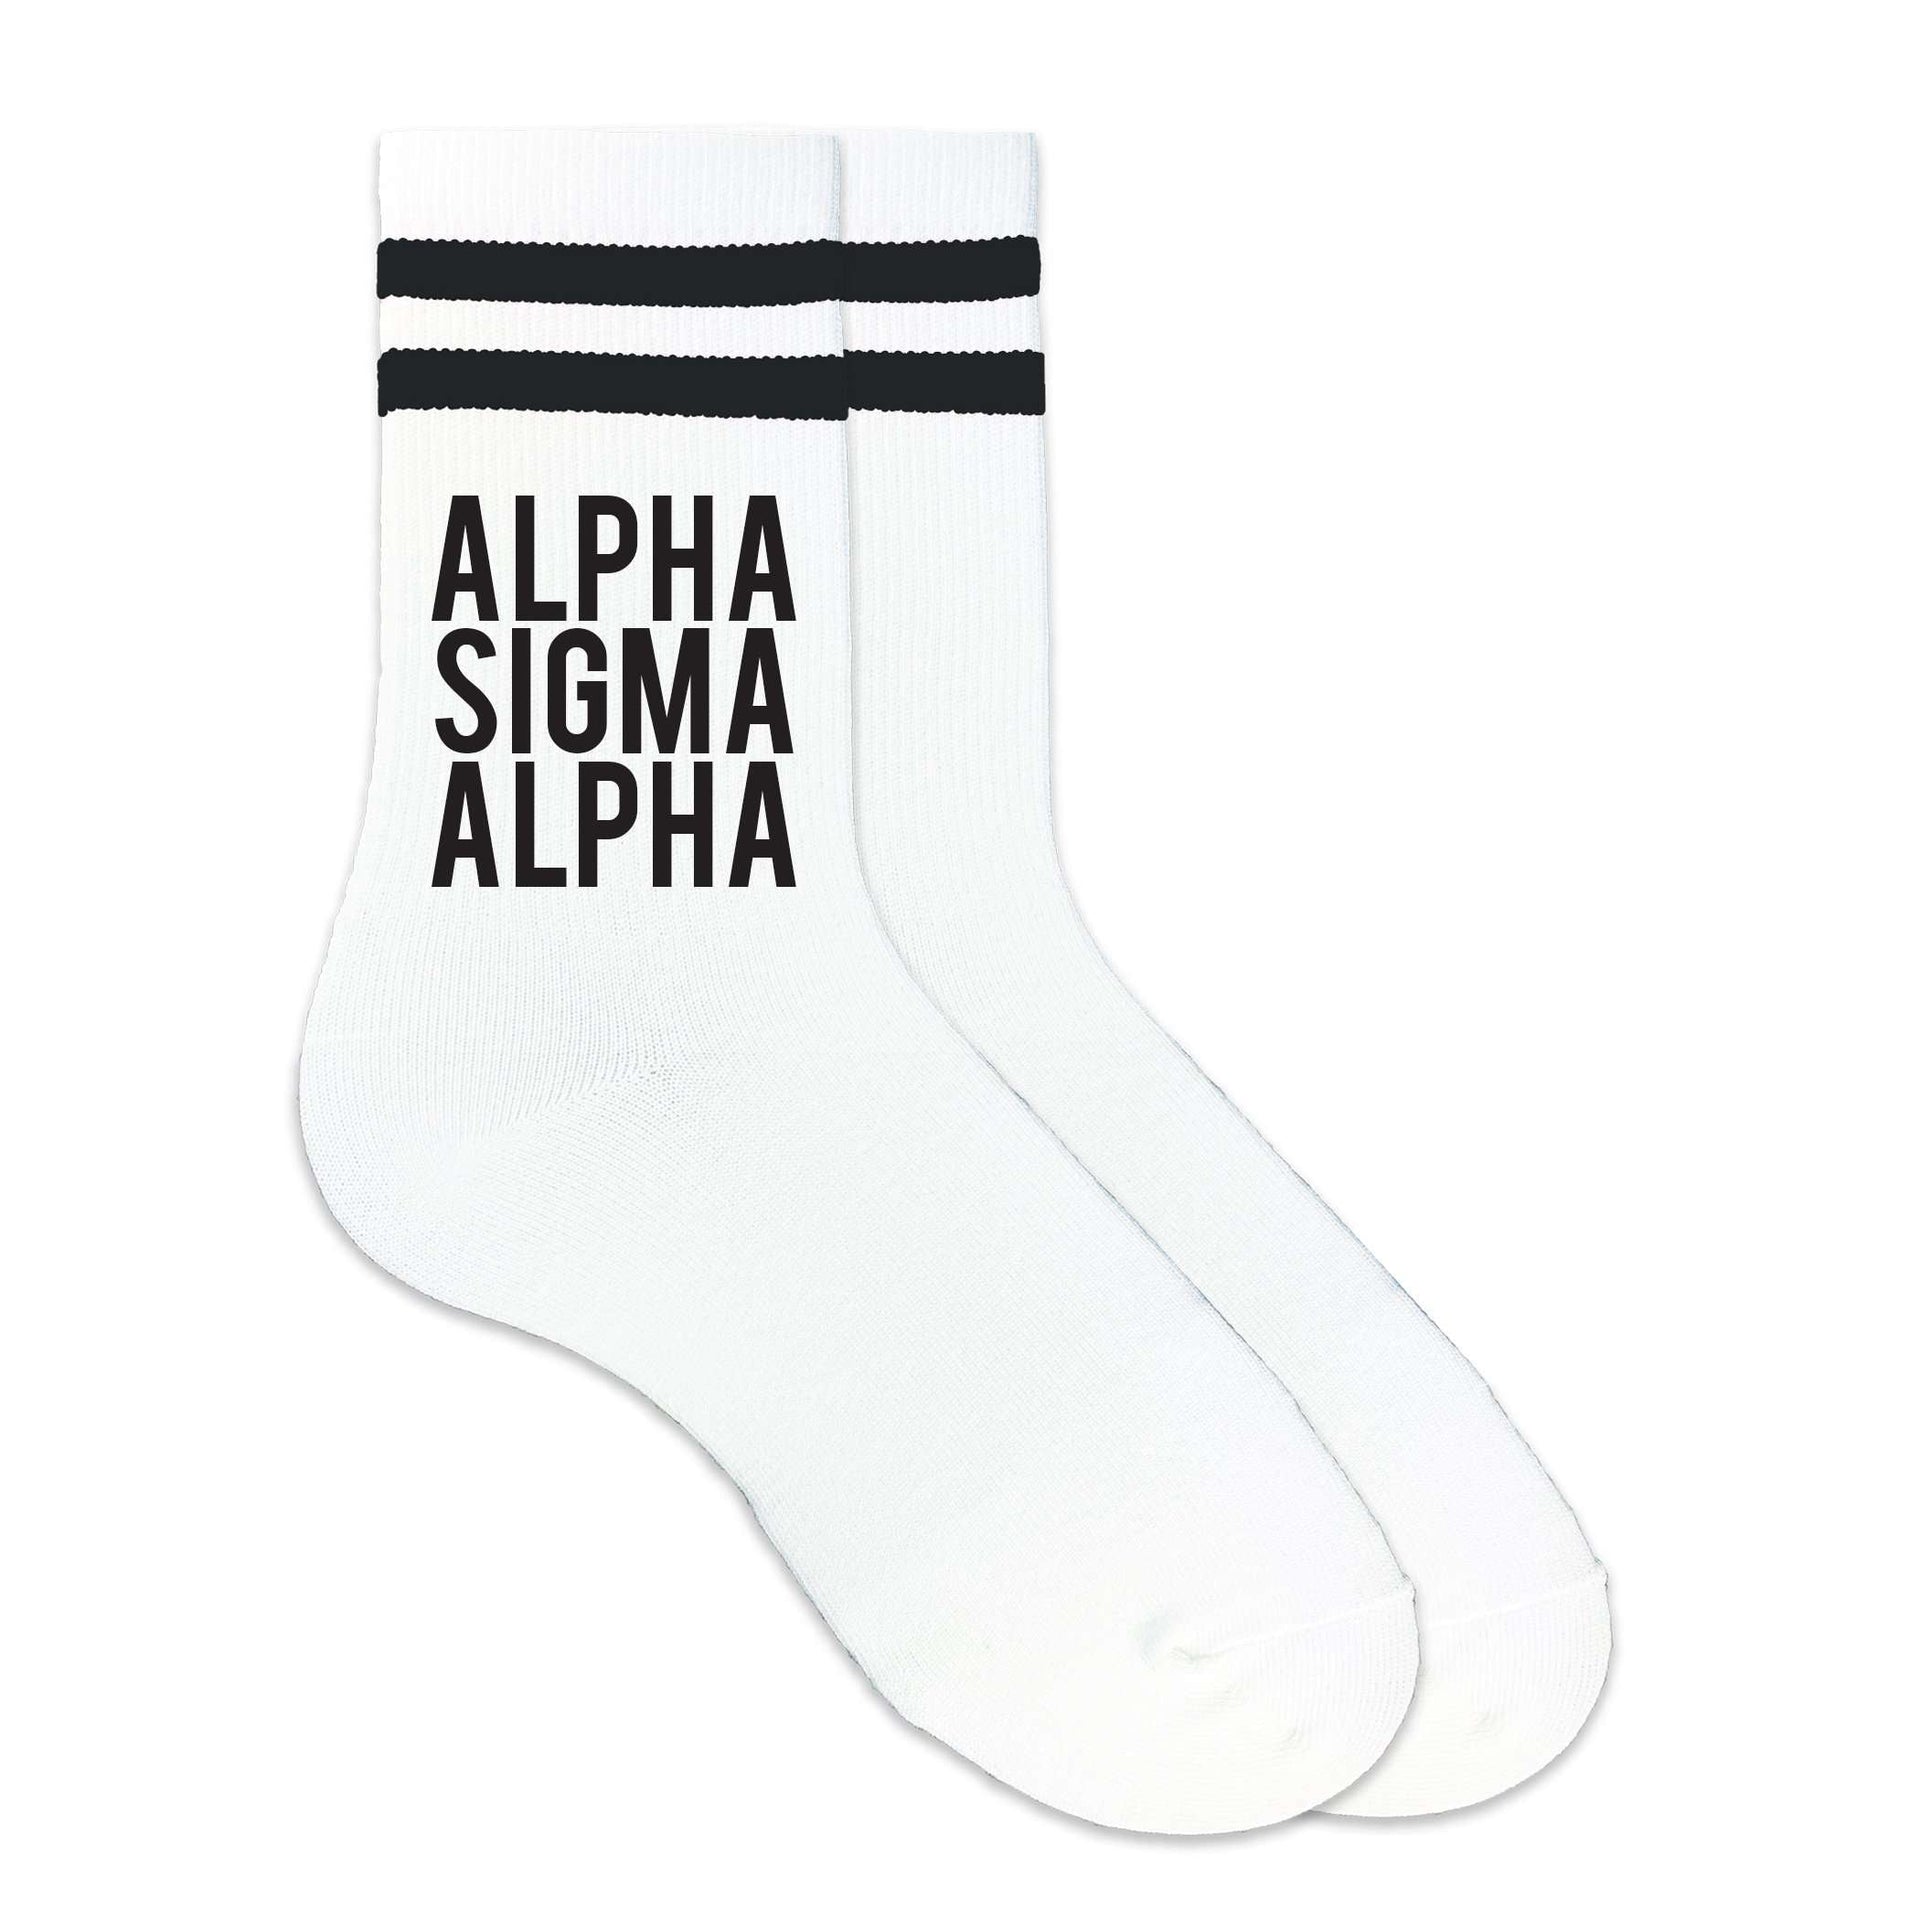 Alpha Sigma Alpha sorority name custom printed on black striped crew socks